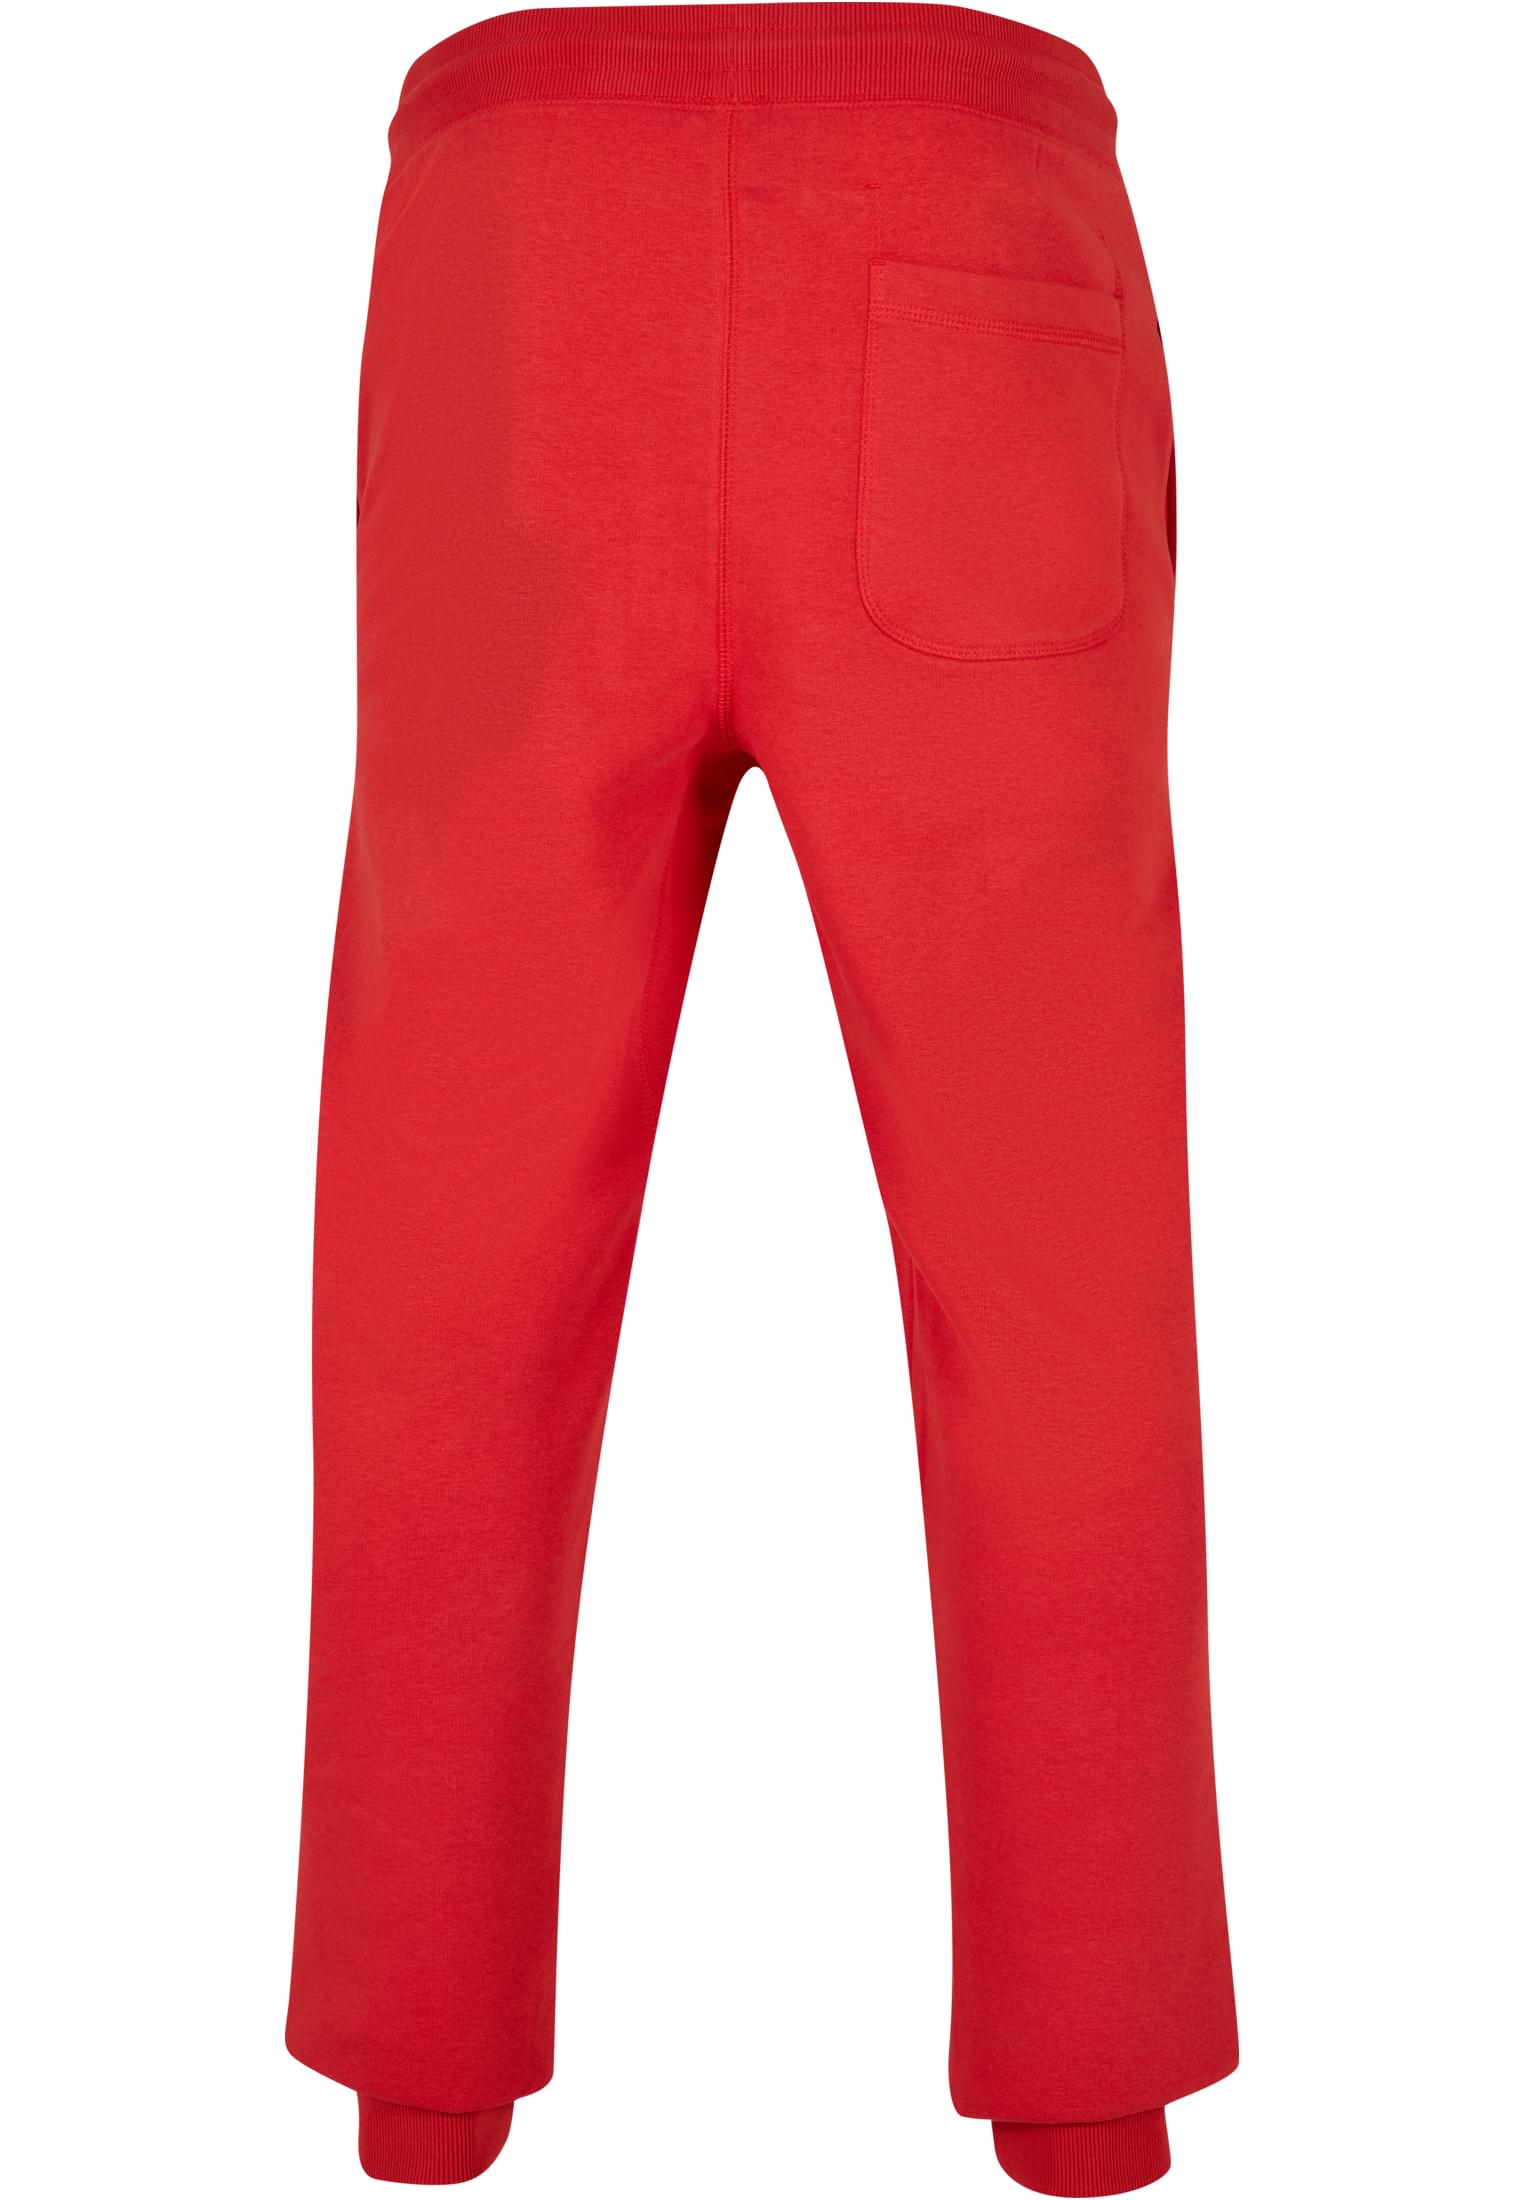 Herren Basic Sweatpants in Farbe hugered